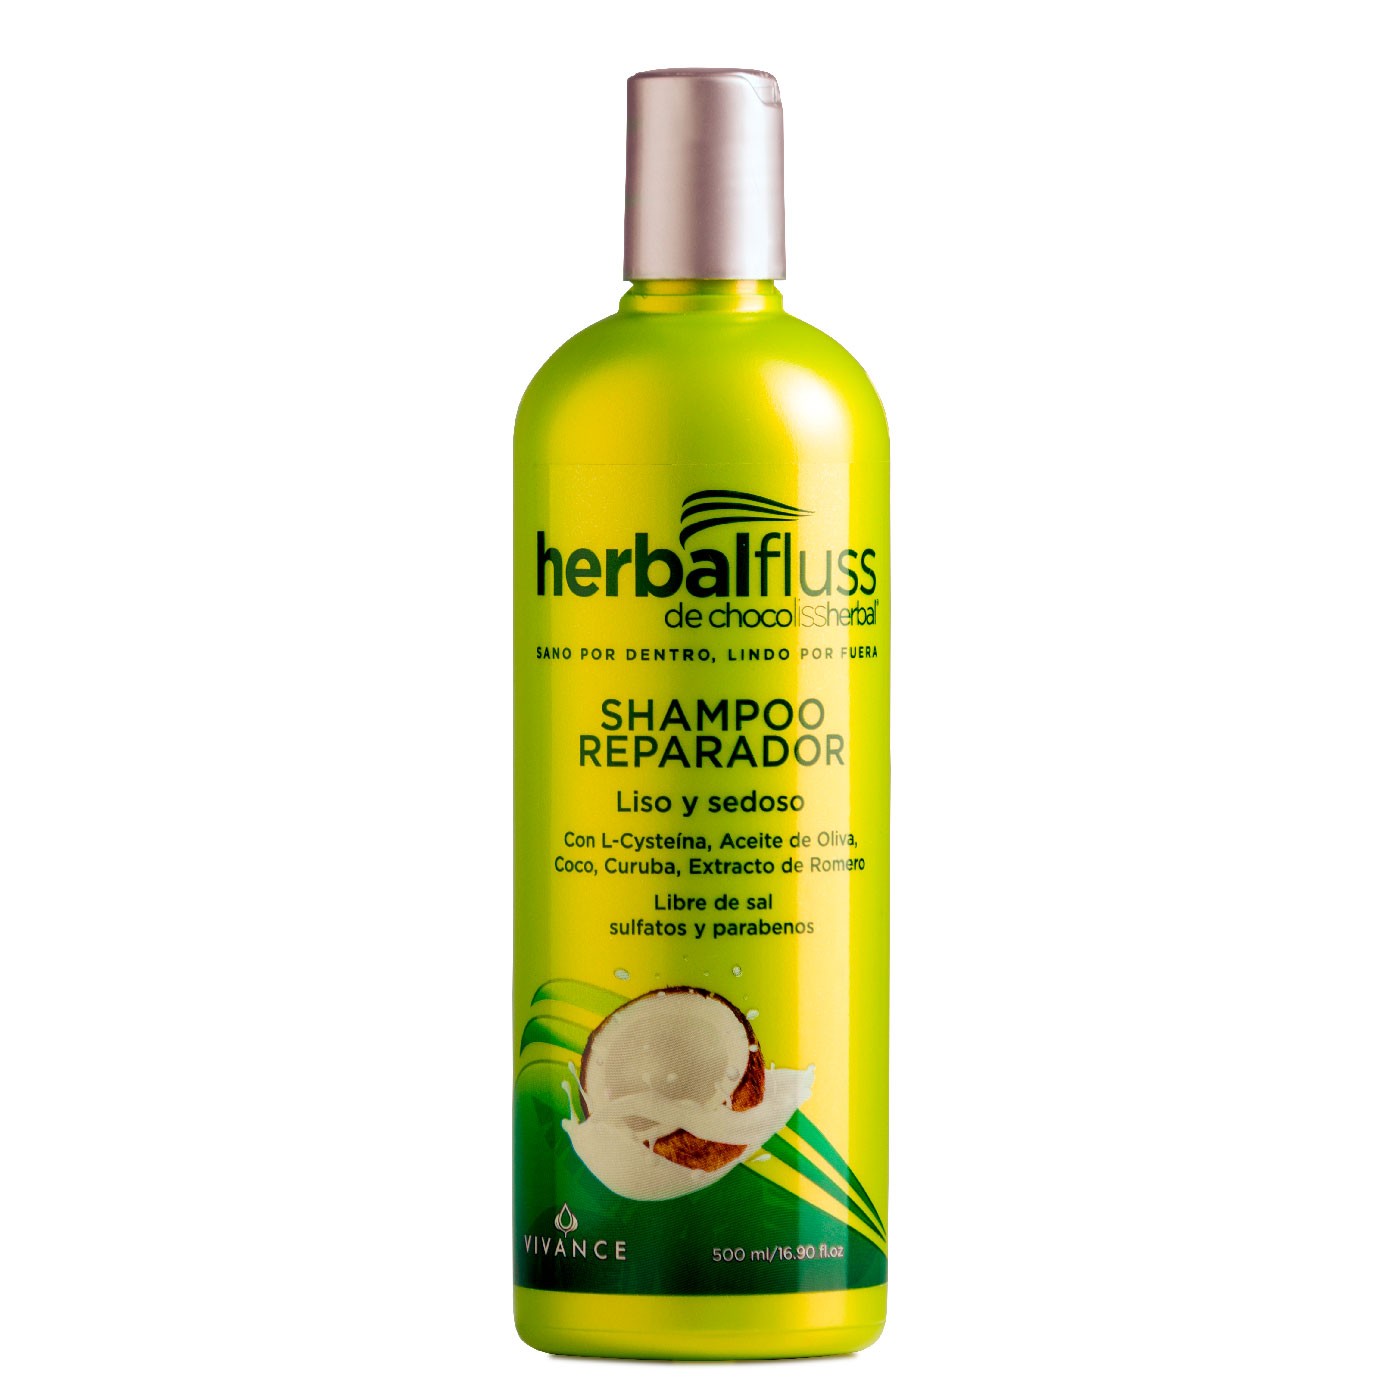 Shampoo Reparador Herbalfluss